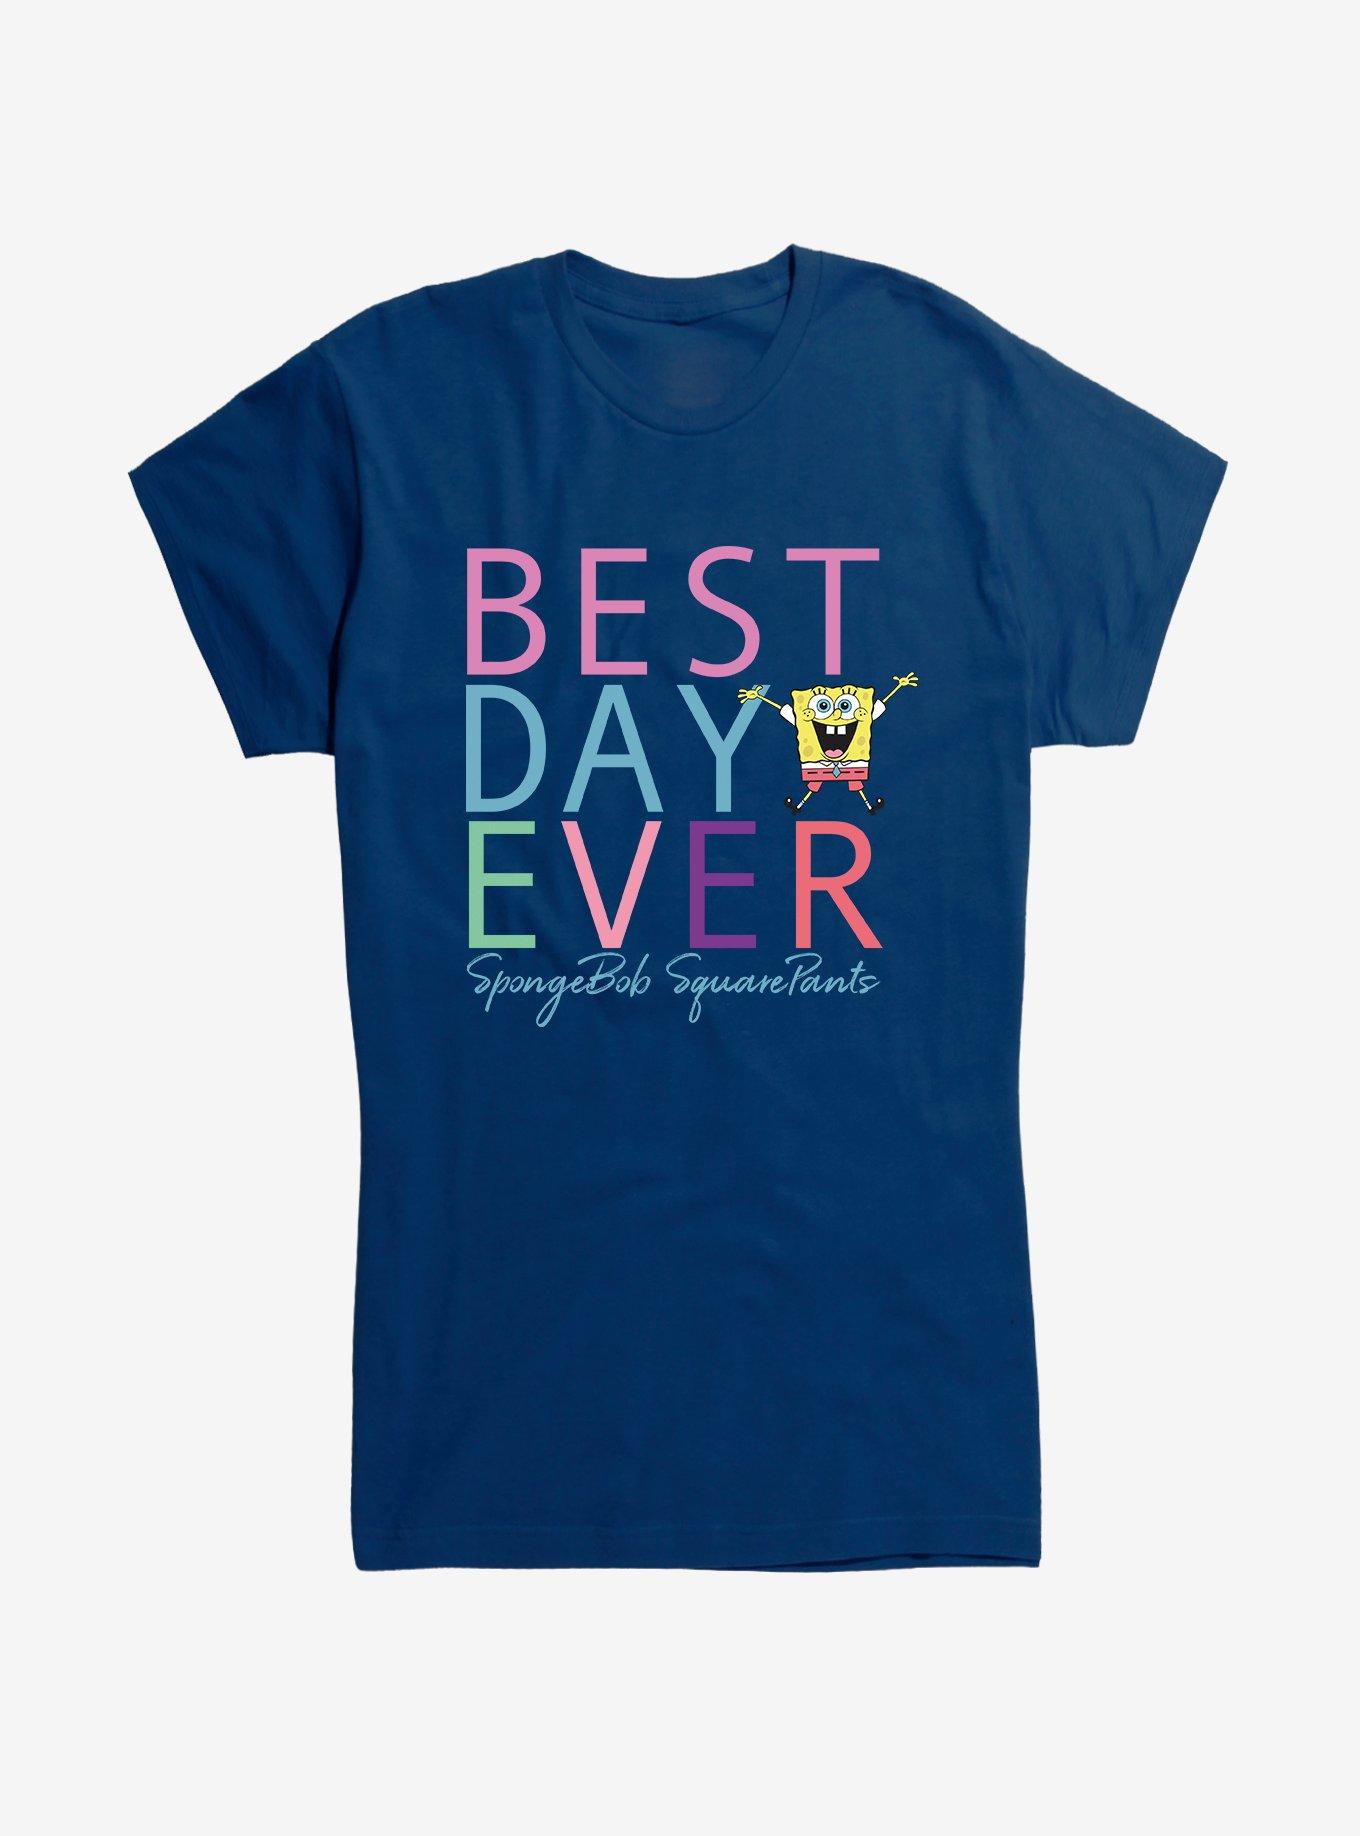 Spongebob Squarepants Best Day Ever Rainbow Girls T Shirt Hot Topic 4679